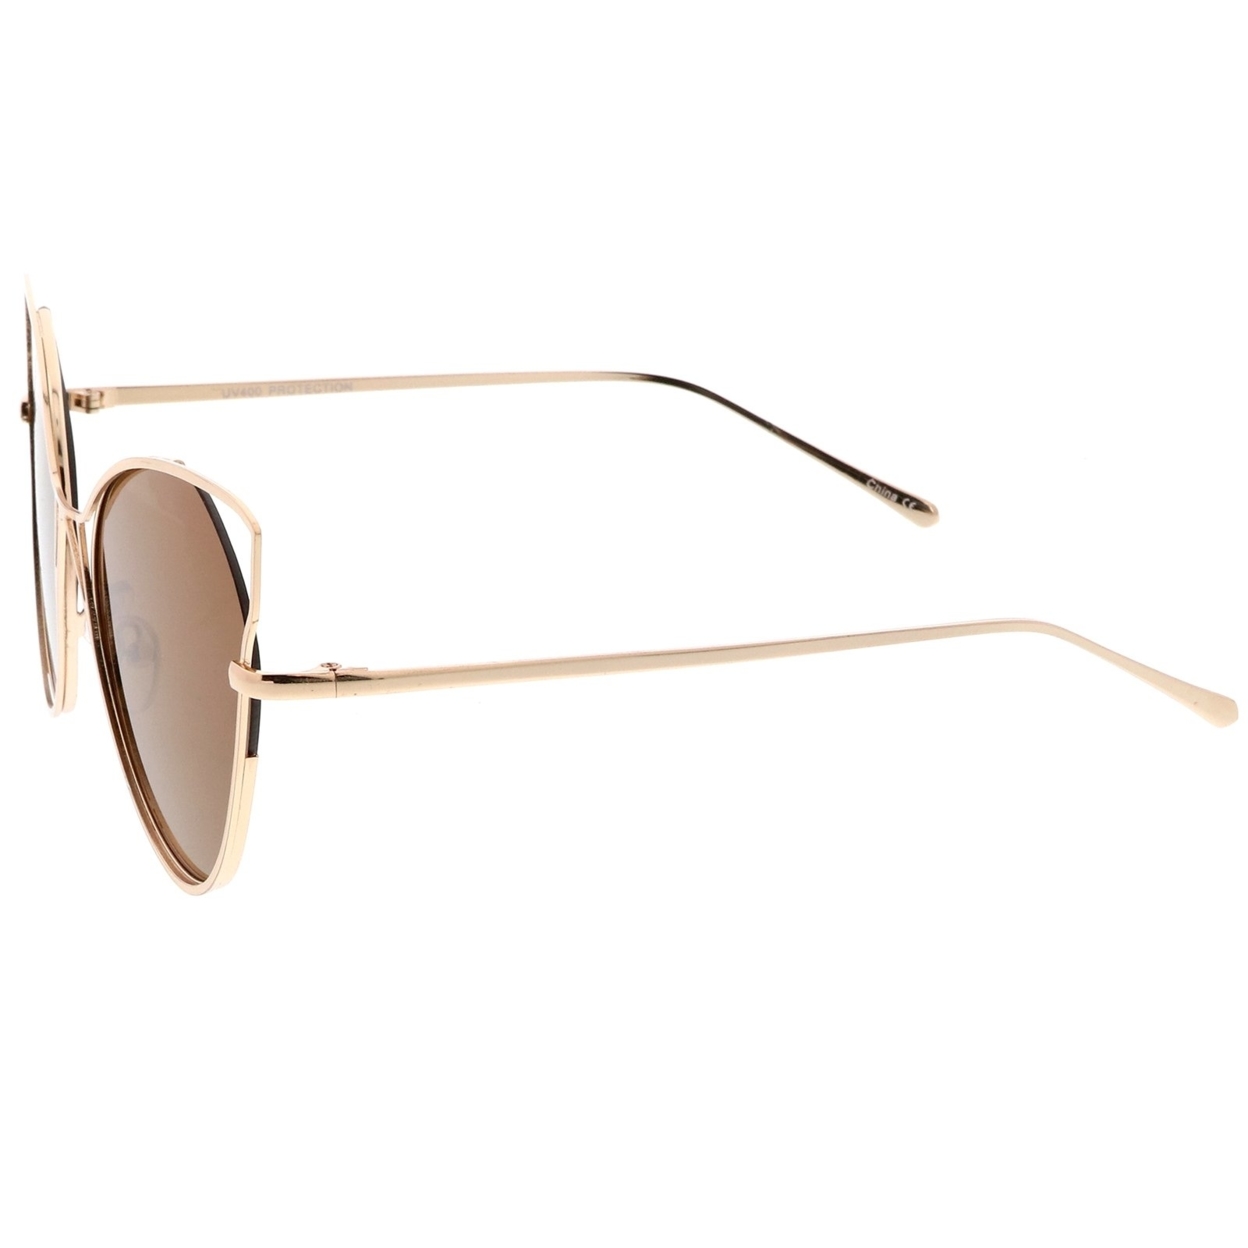 Women's Open Metal Slim Temple Neutral Colored Flat Lens Oversize Cat Eye Sunglasses 60mm - Silver / Lavender